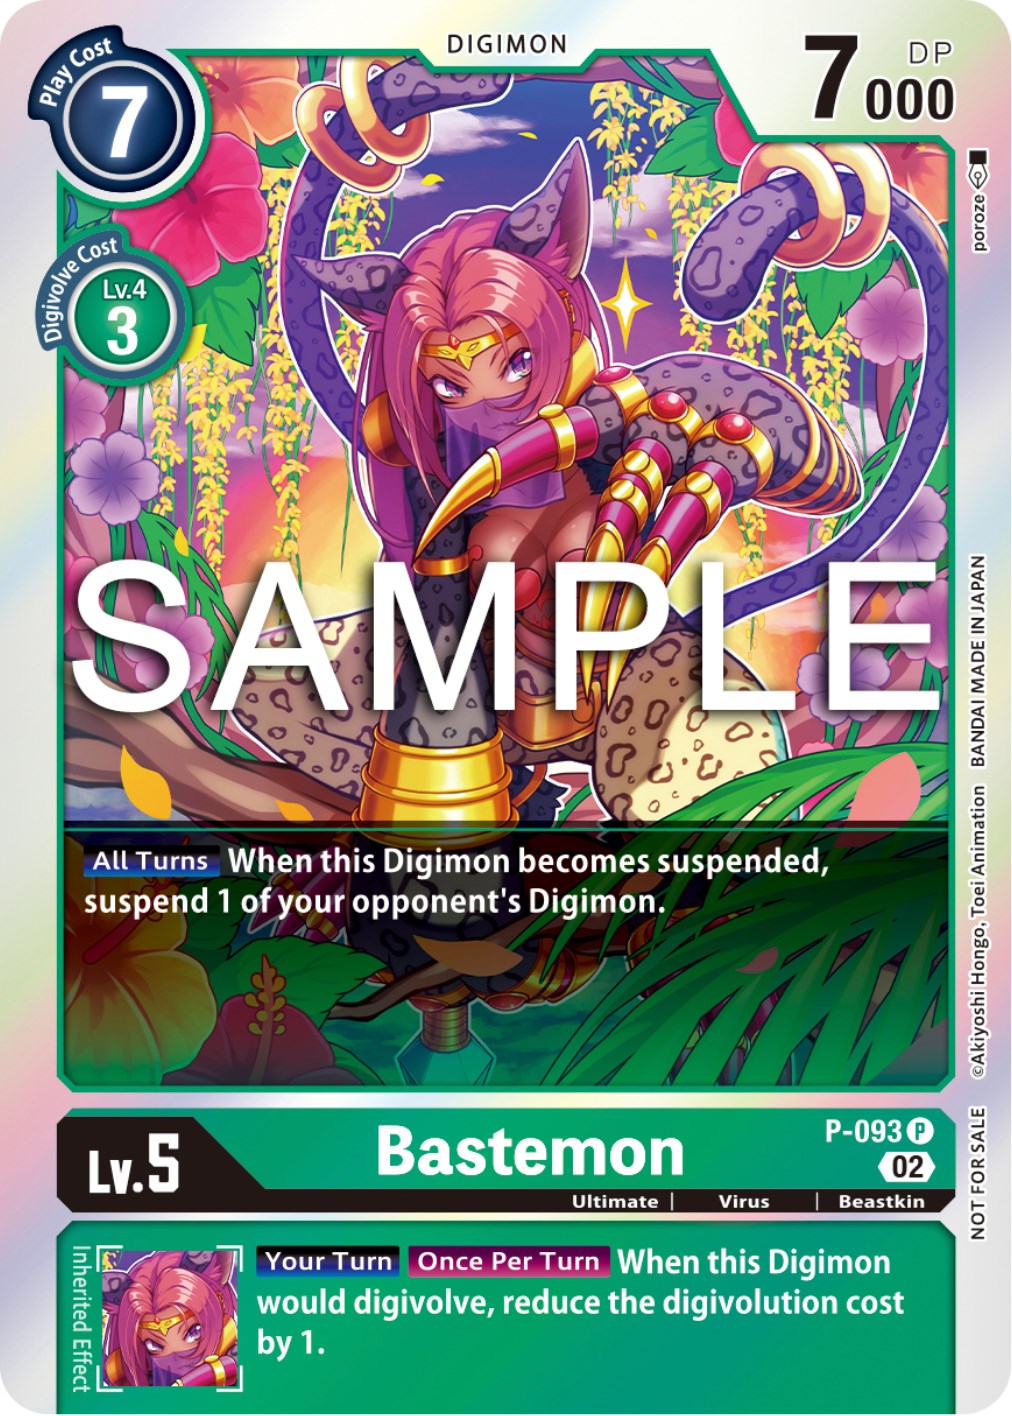 Bastemon [P-093] - P-093 (3rd Anniversary Update Pack) [Promotional Cards] | Play N Trade Winnipeg